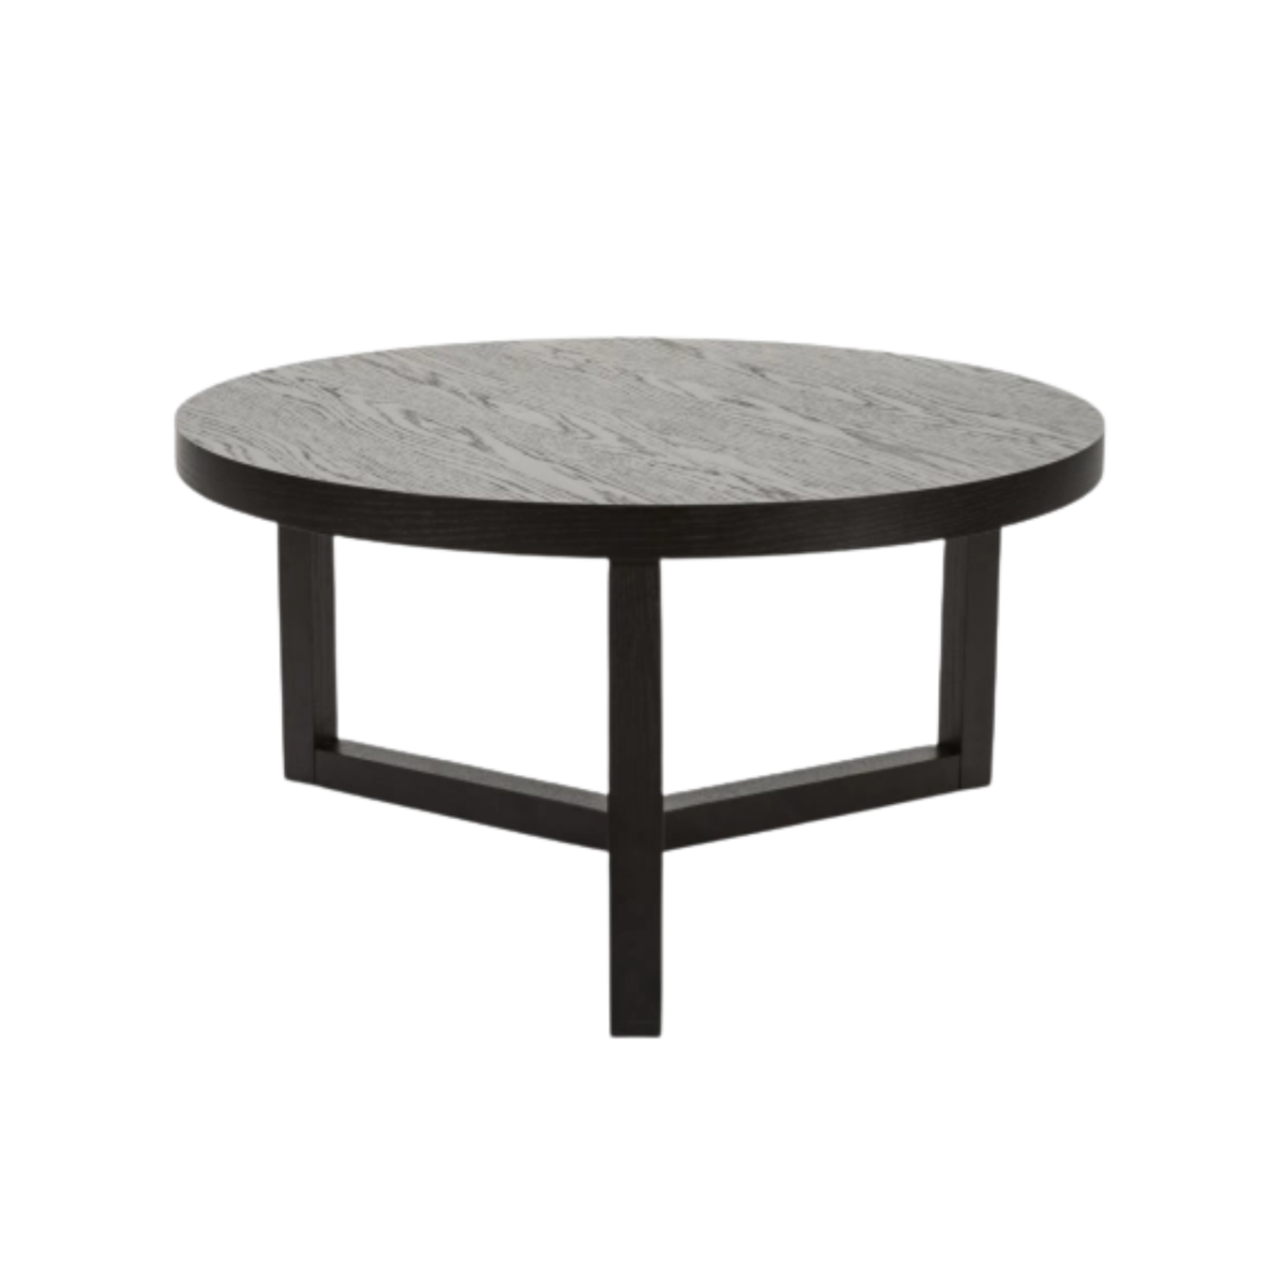 Simple modern circular wooden coffee table